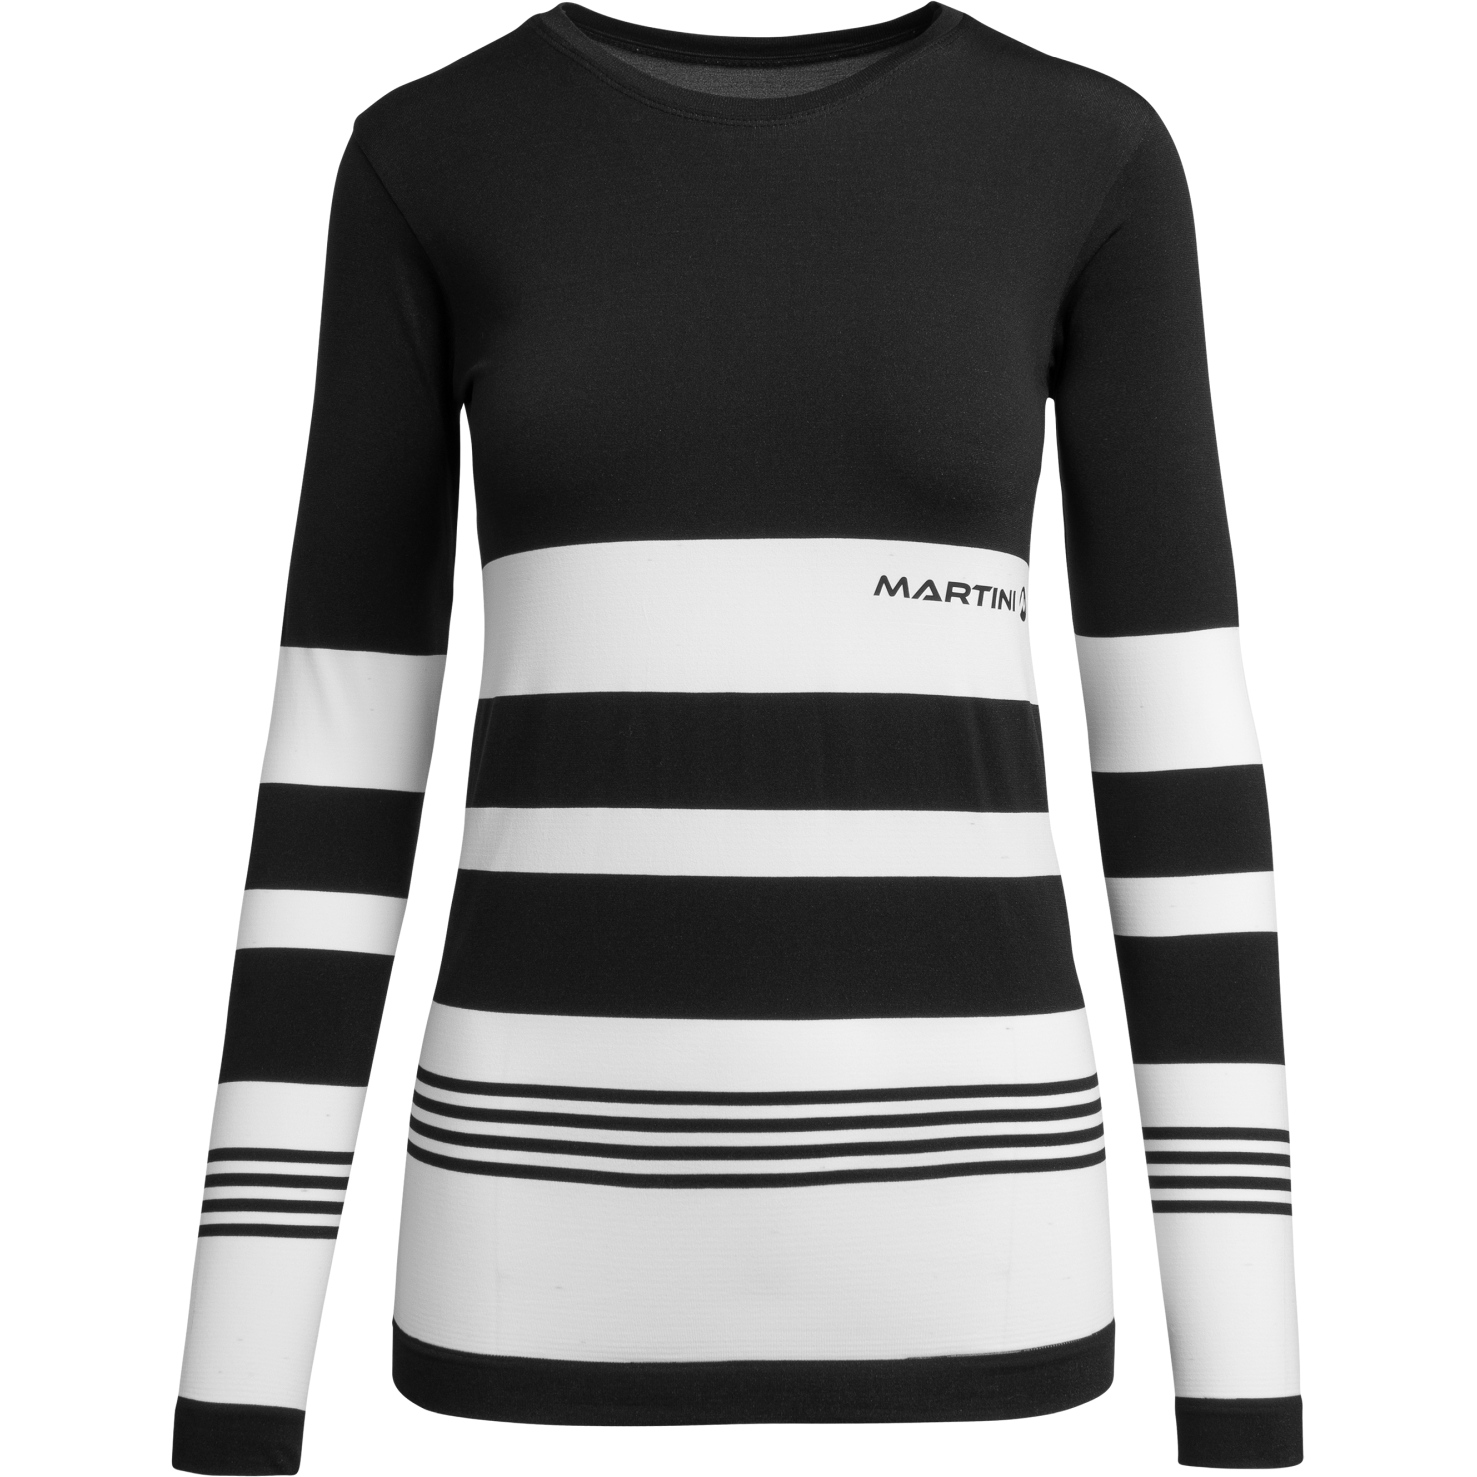 Produktbild von Martini Sportswear Passion Langarm-Shirt Damen - black/white/white